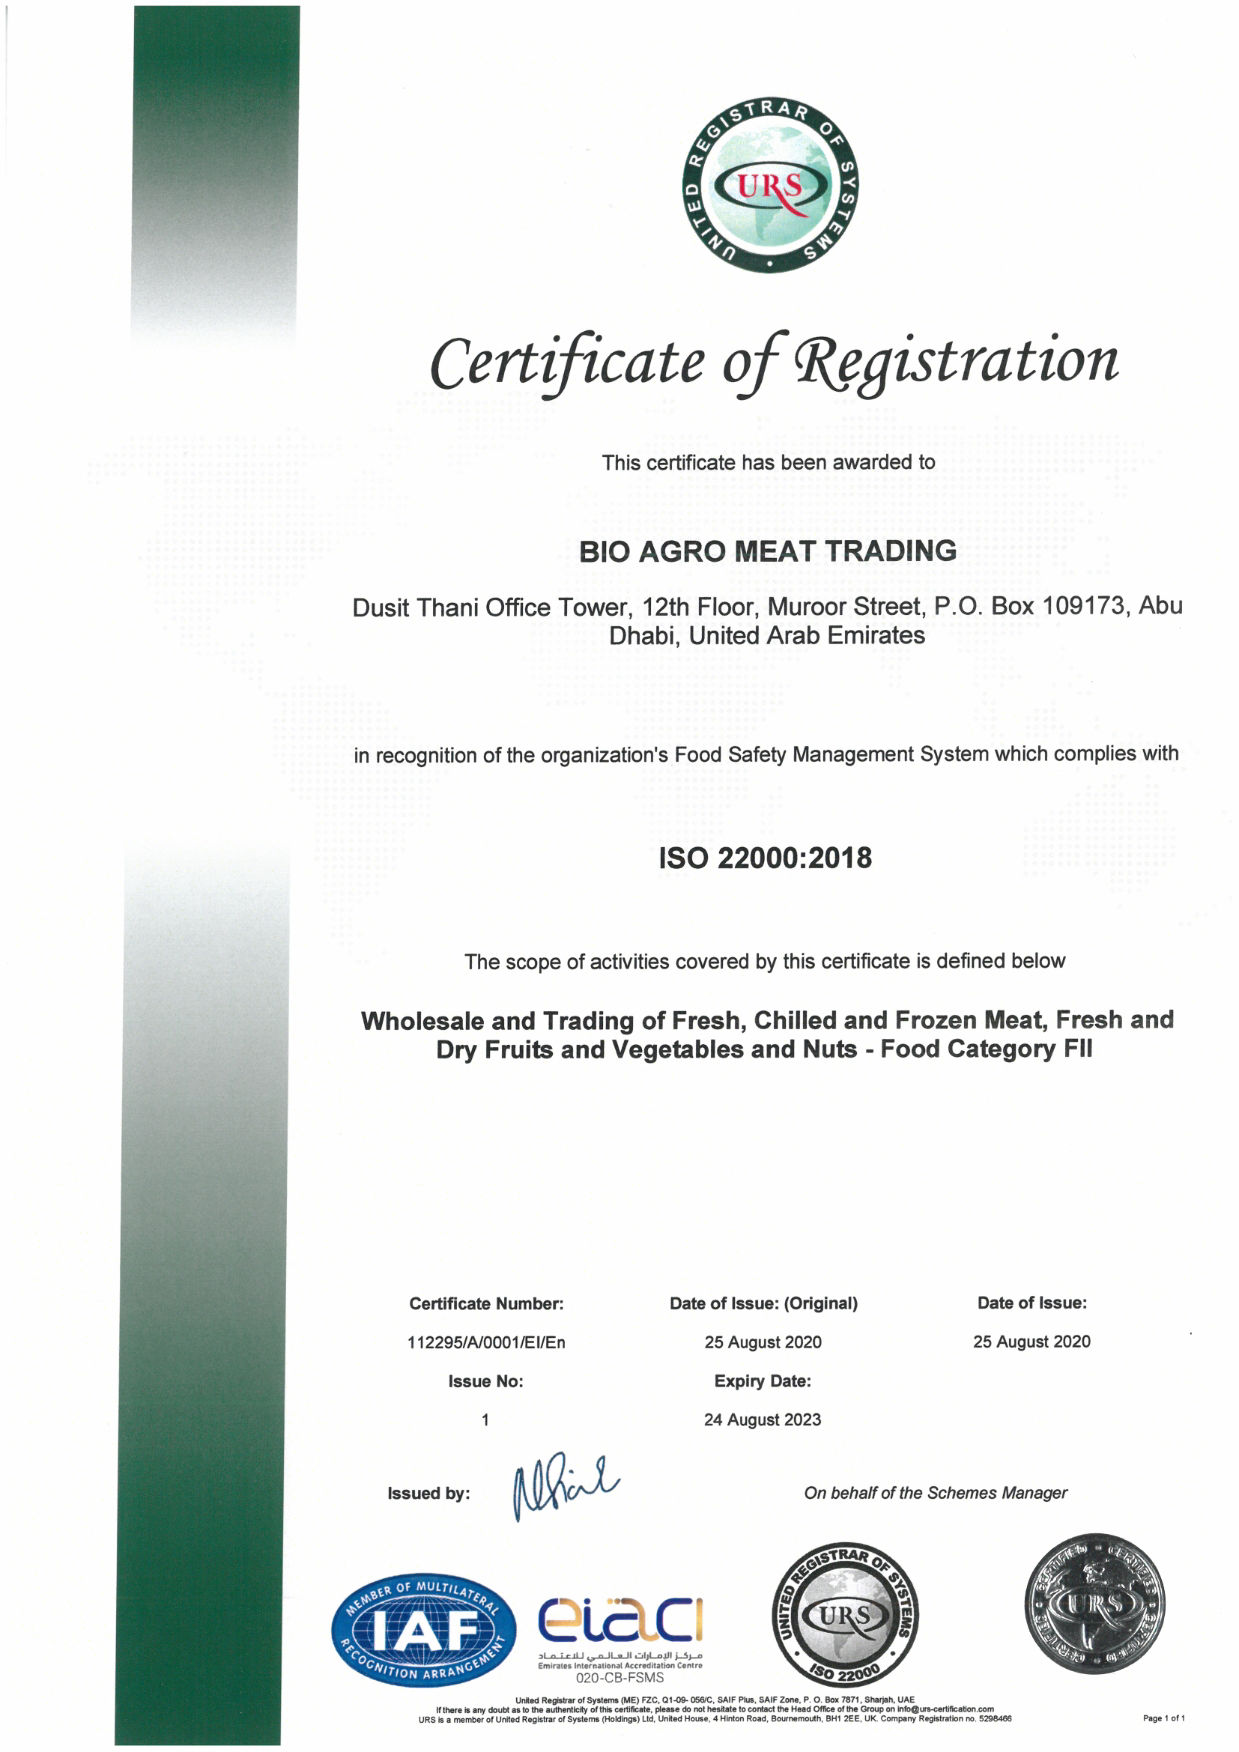 Bio Agro Meat Trading